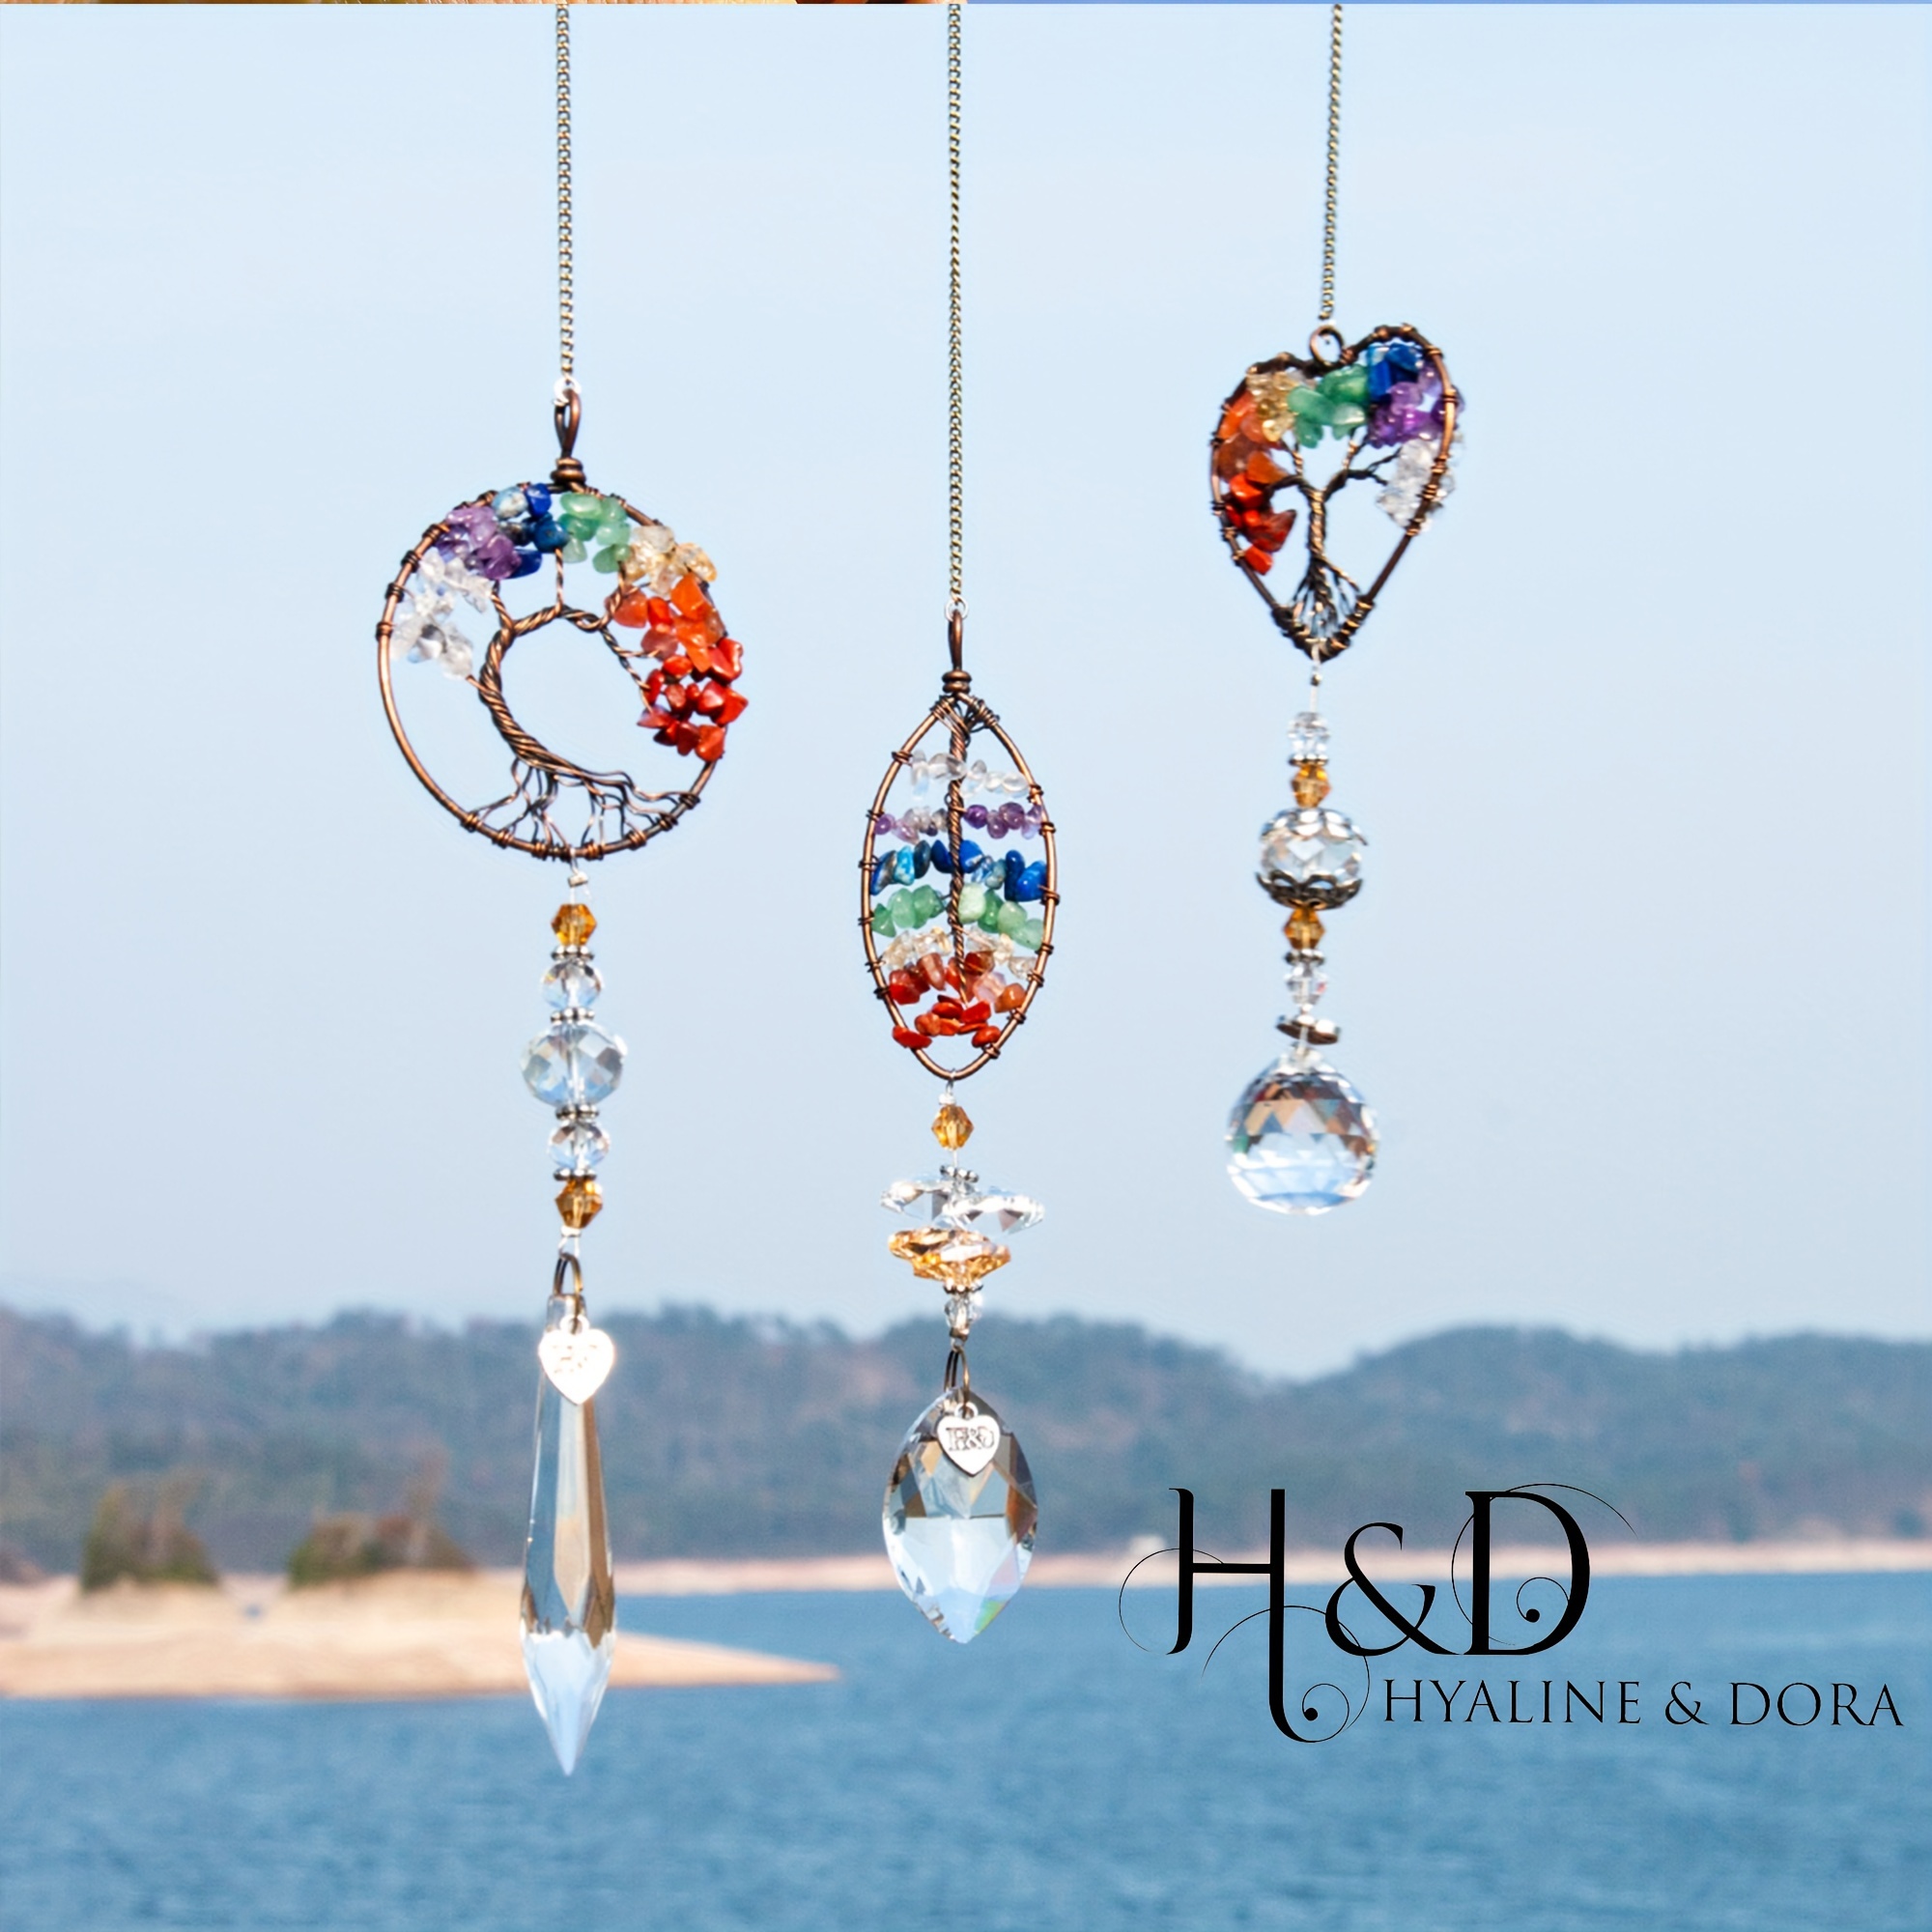 

H&d Hyaline& 3pcs Handmade Chakra Suncatcher Windows Hanging Crystal Drop Prisms Suncatcher Ornaments Home Garden Decor